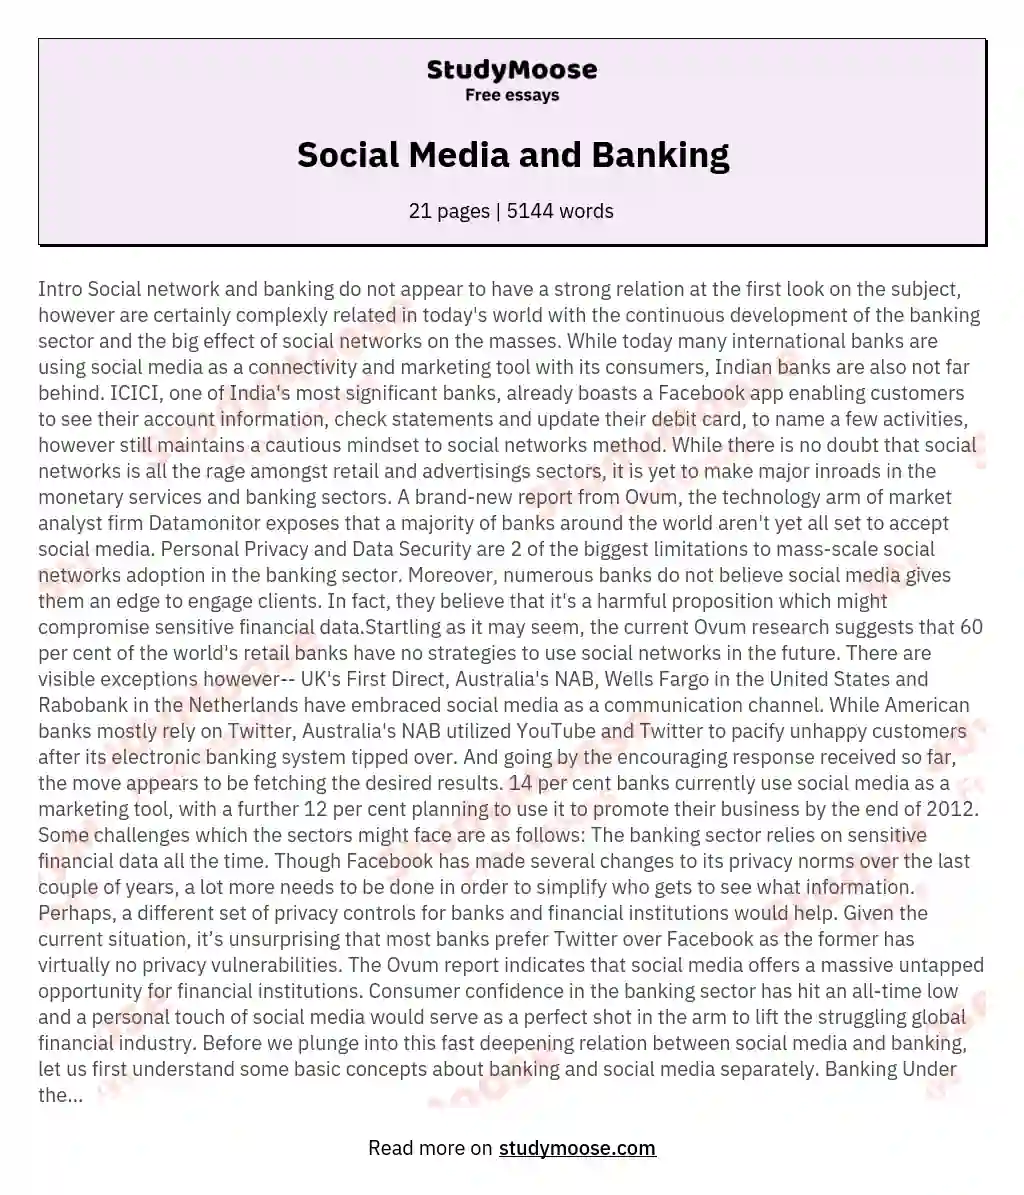 Social Media and Banking essay